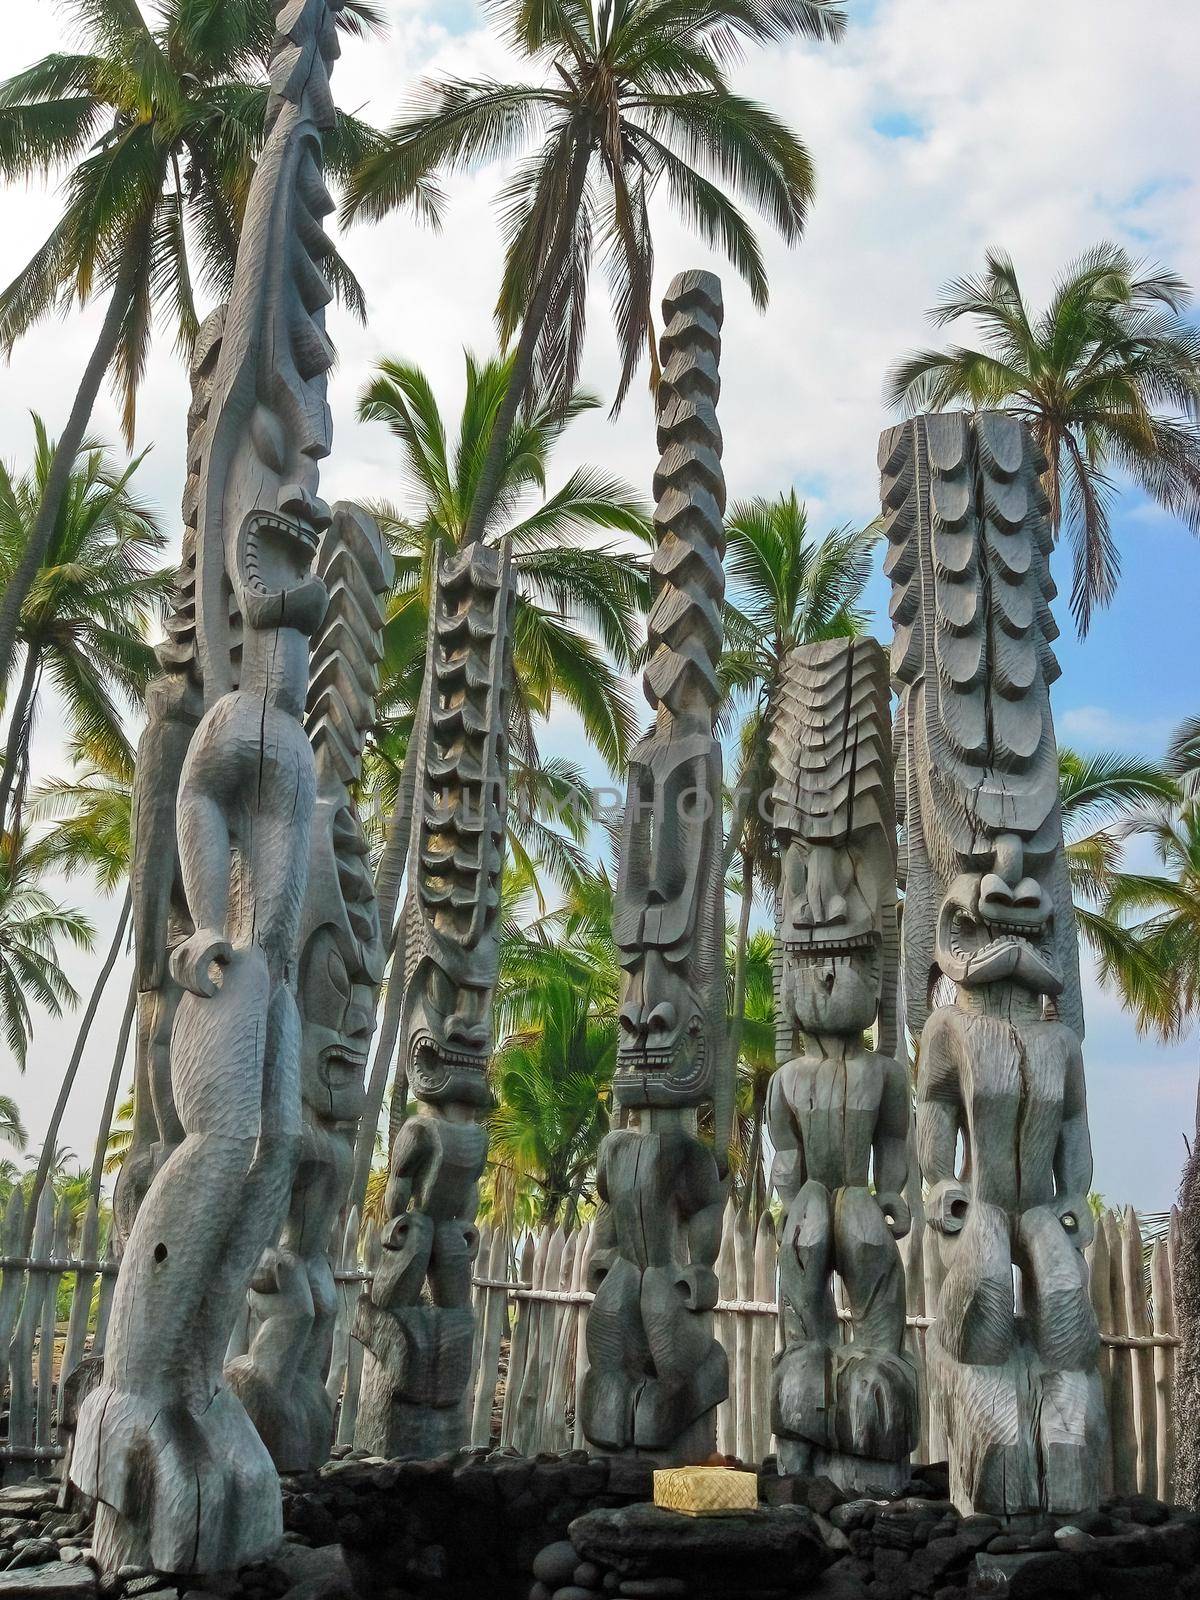 Wooden carvings resembling Hawaiian gods, Kii, stand tall at Puuhonua o Honaunau National Historical Park. High quality photo